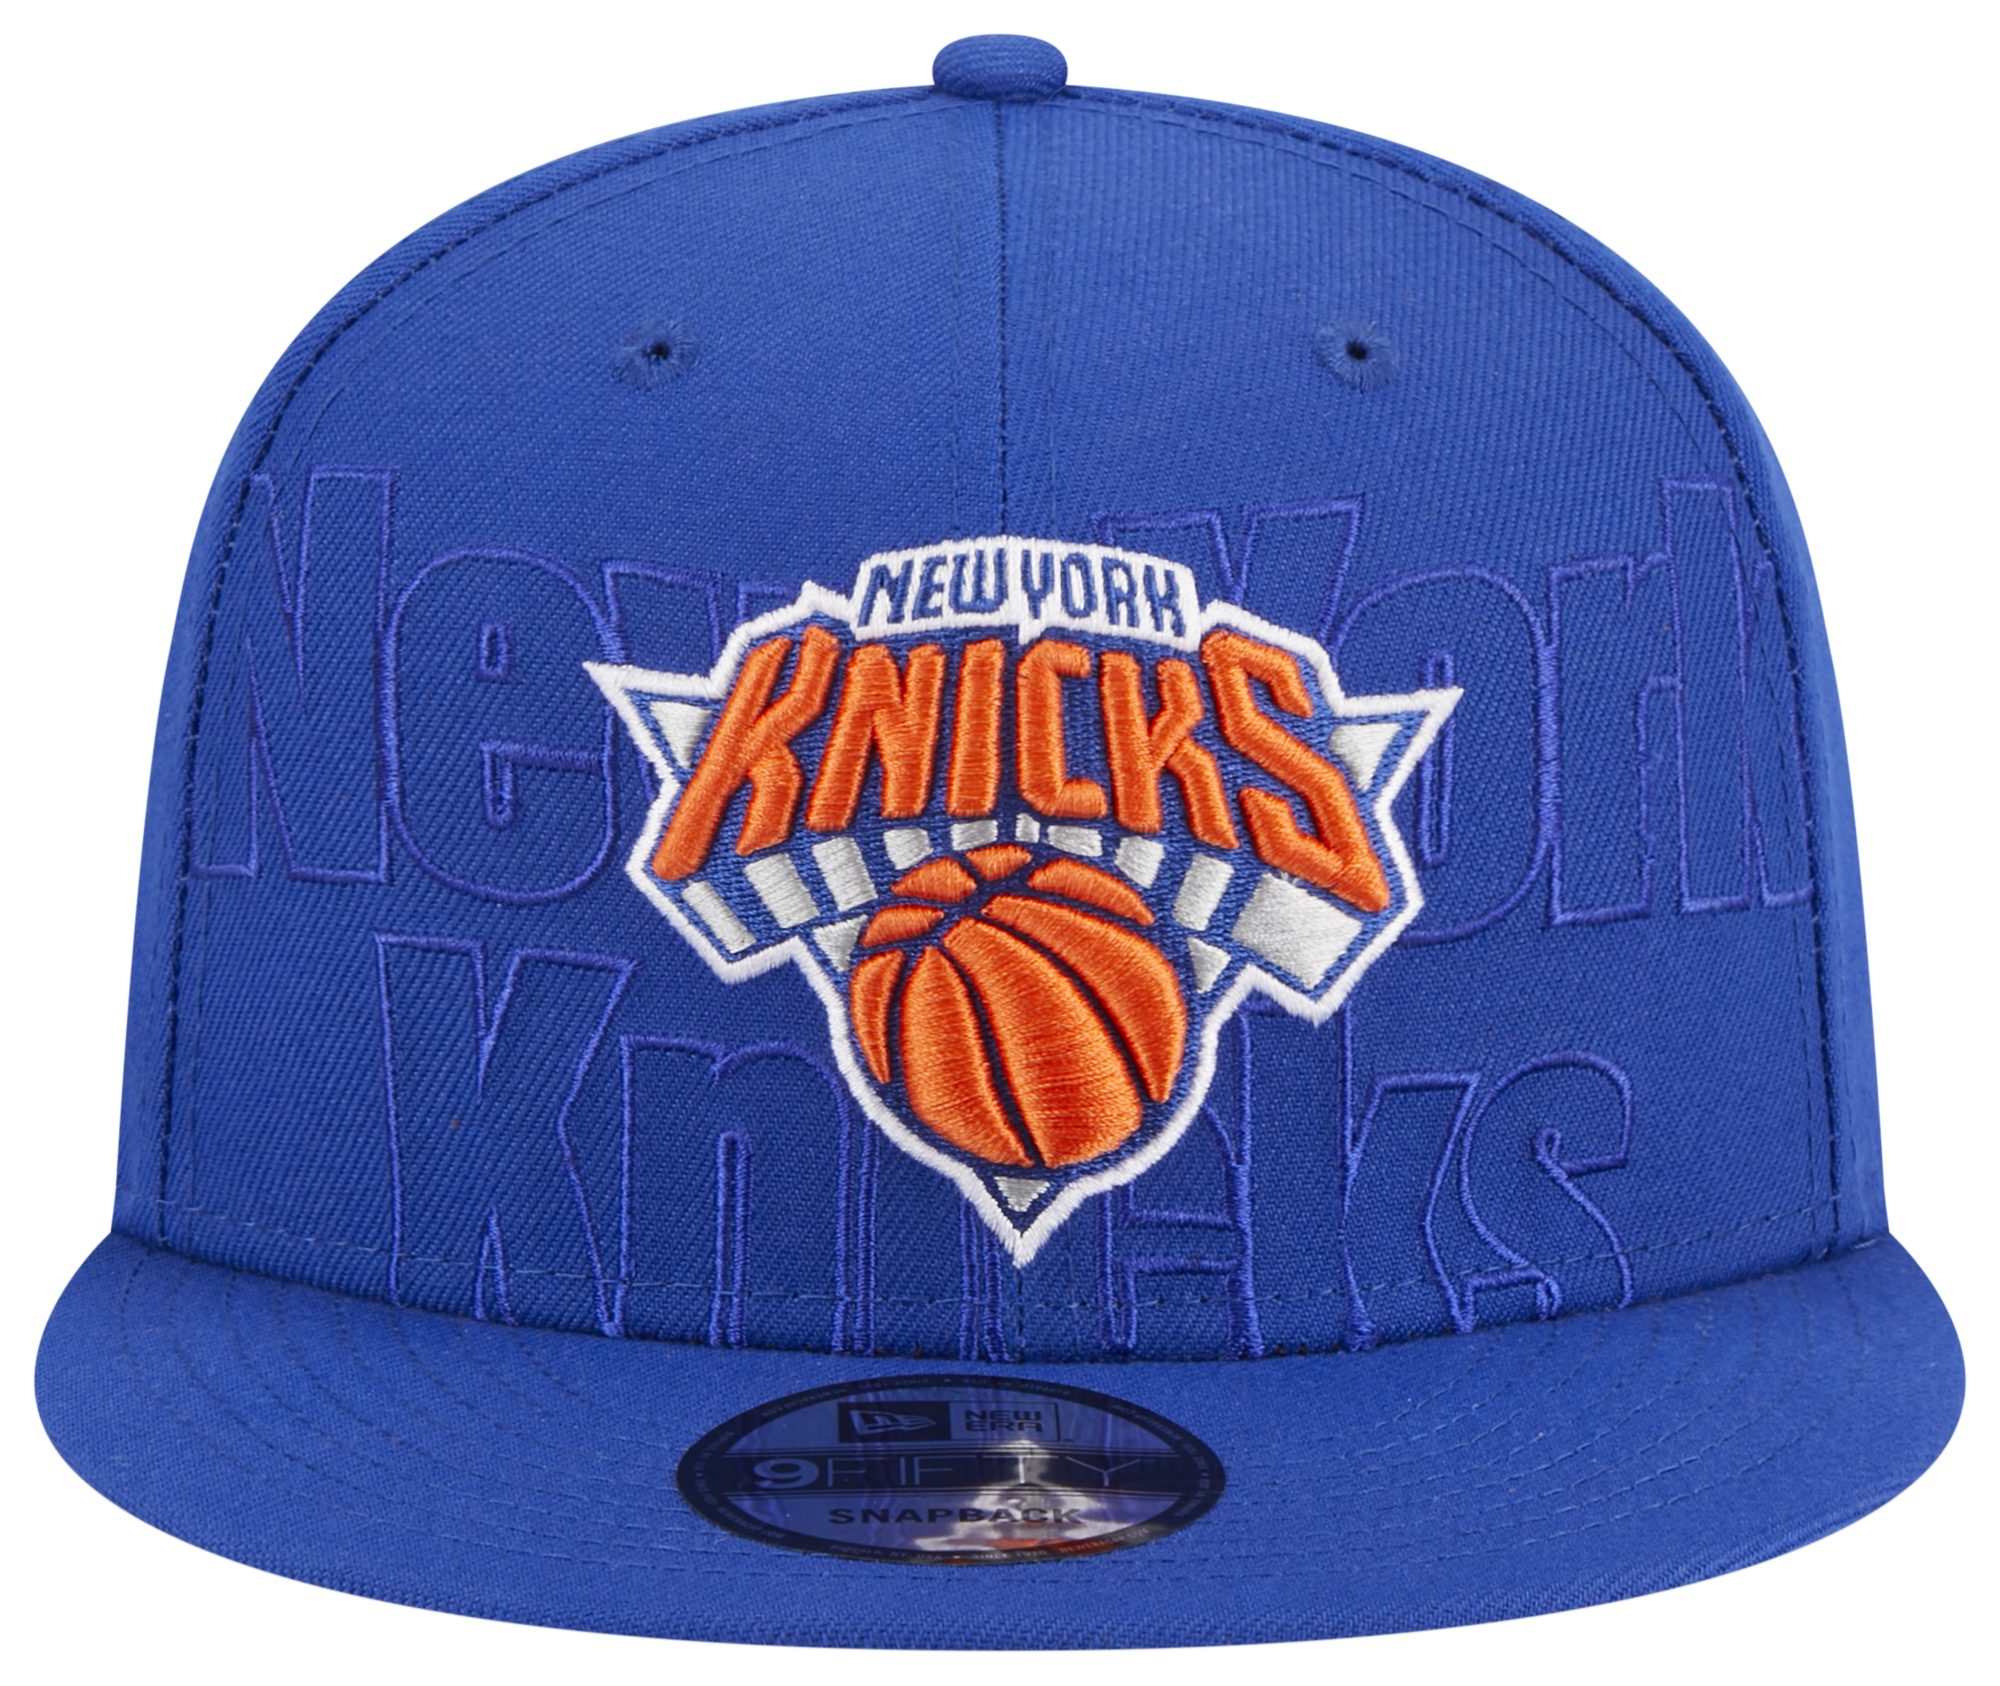 New Era Knicks Draft '23 Snapback